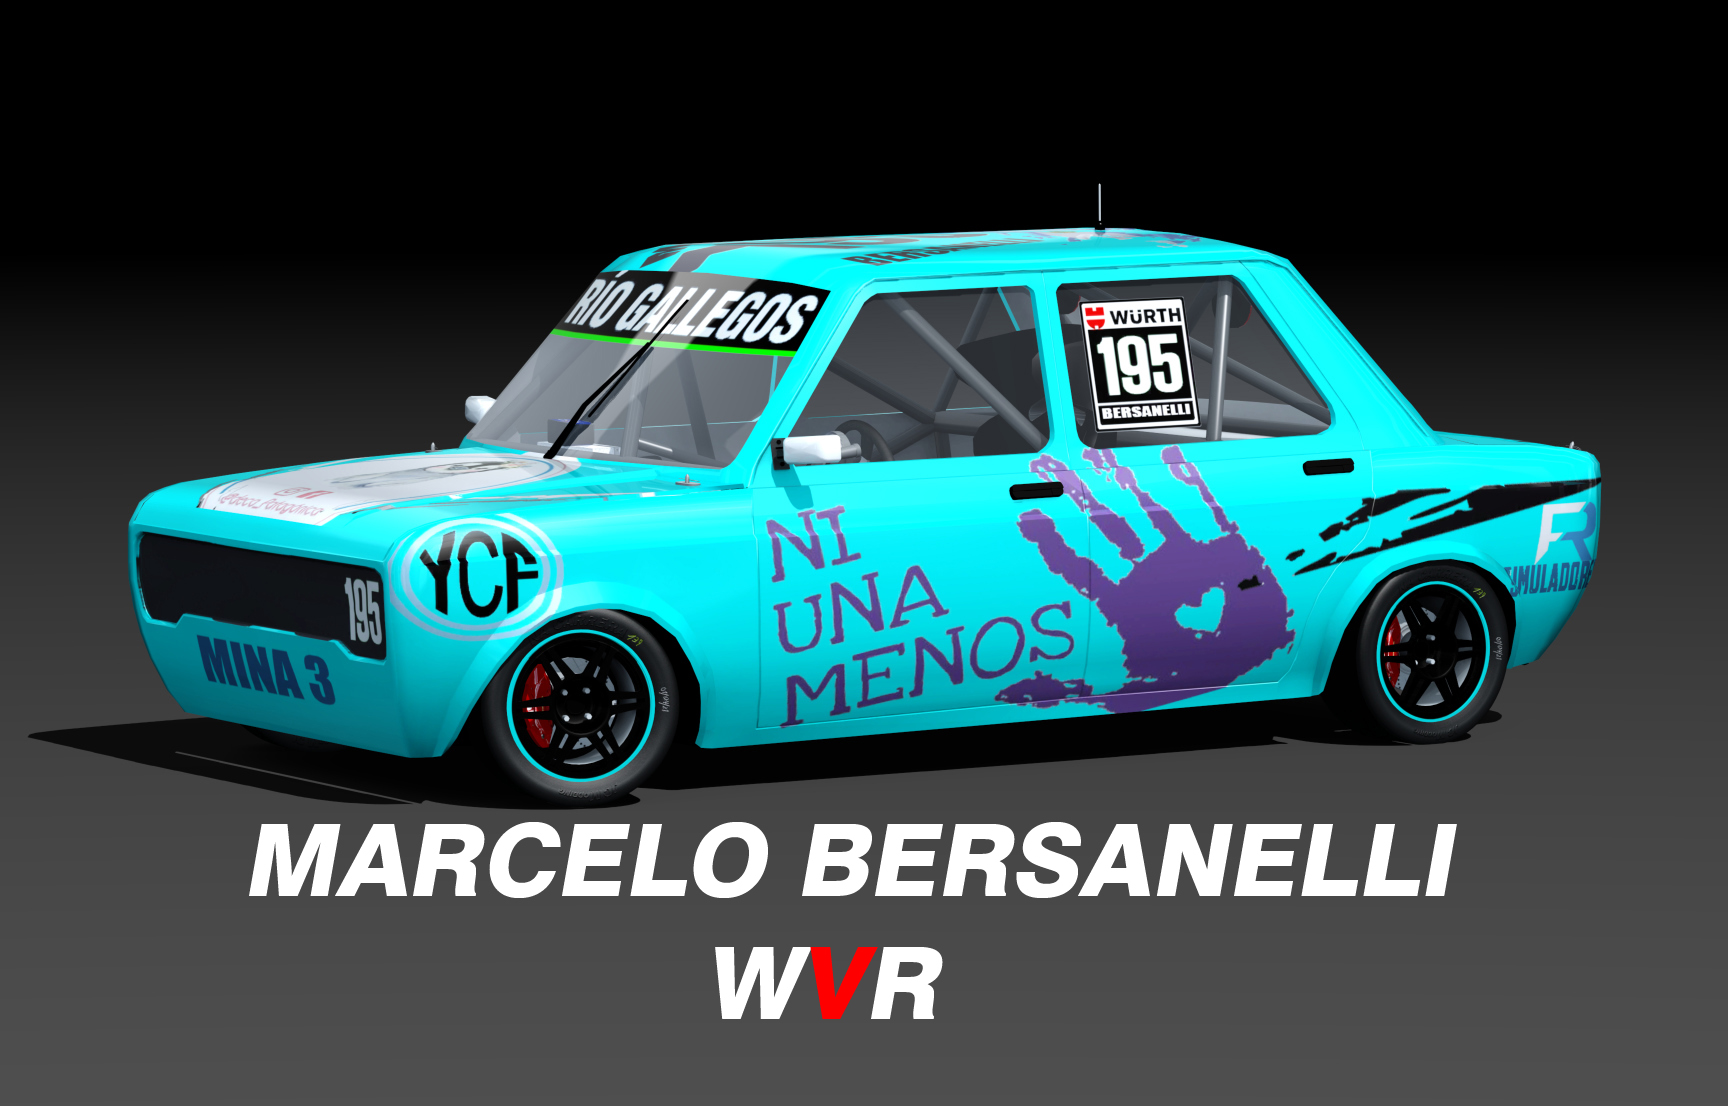 WVR Turismo 1.4 FIAT 128, skin marcelo bersanelli